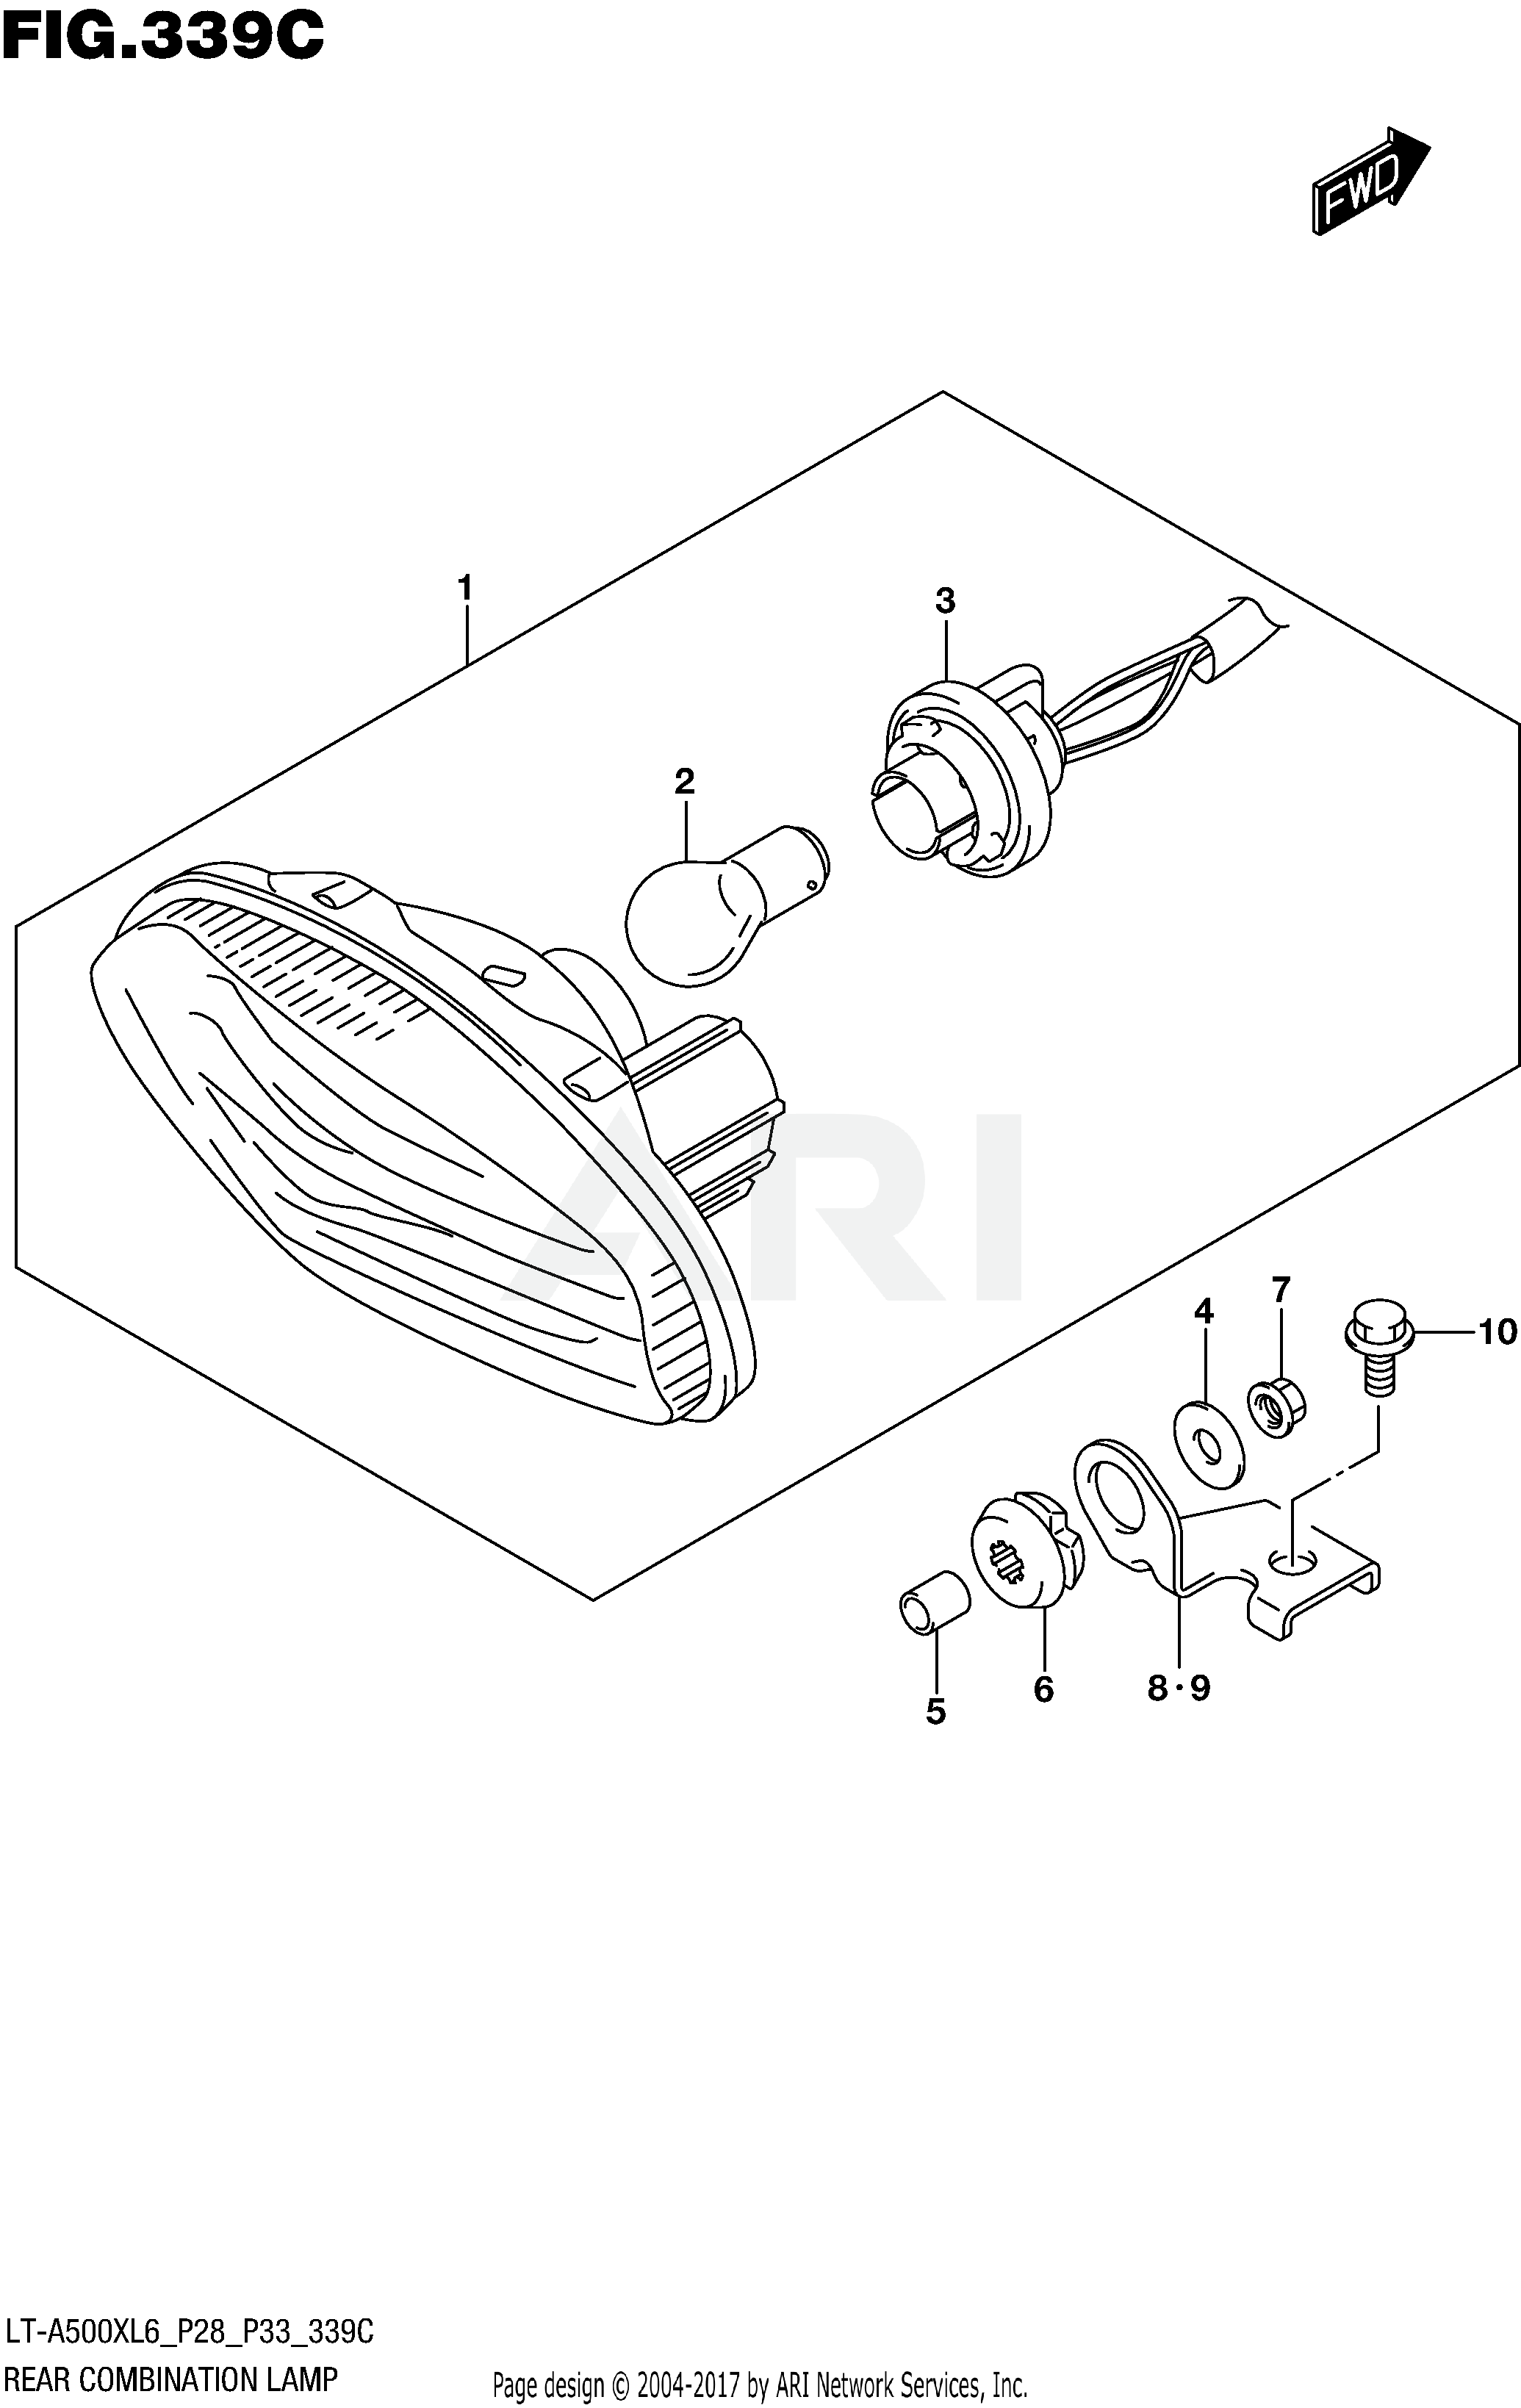 REAR COMBINATION LAMP (LT-A500XZL6 P33)